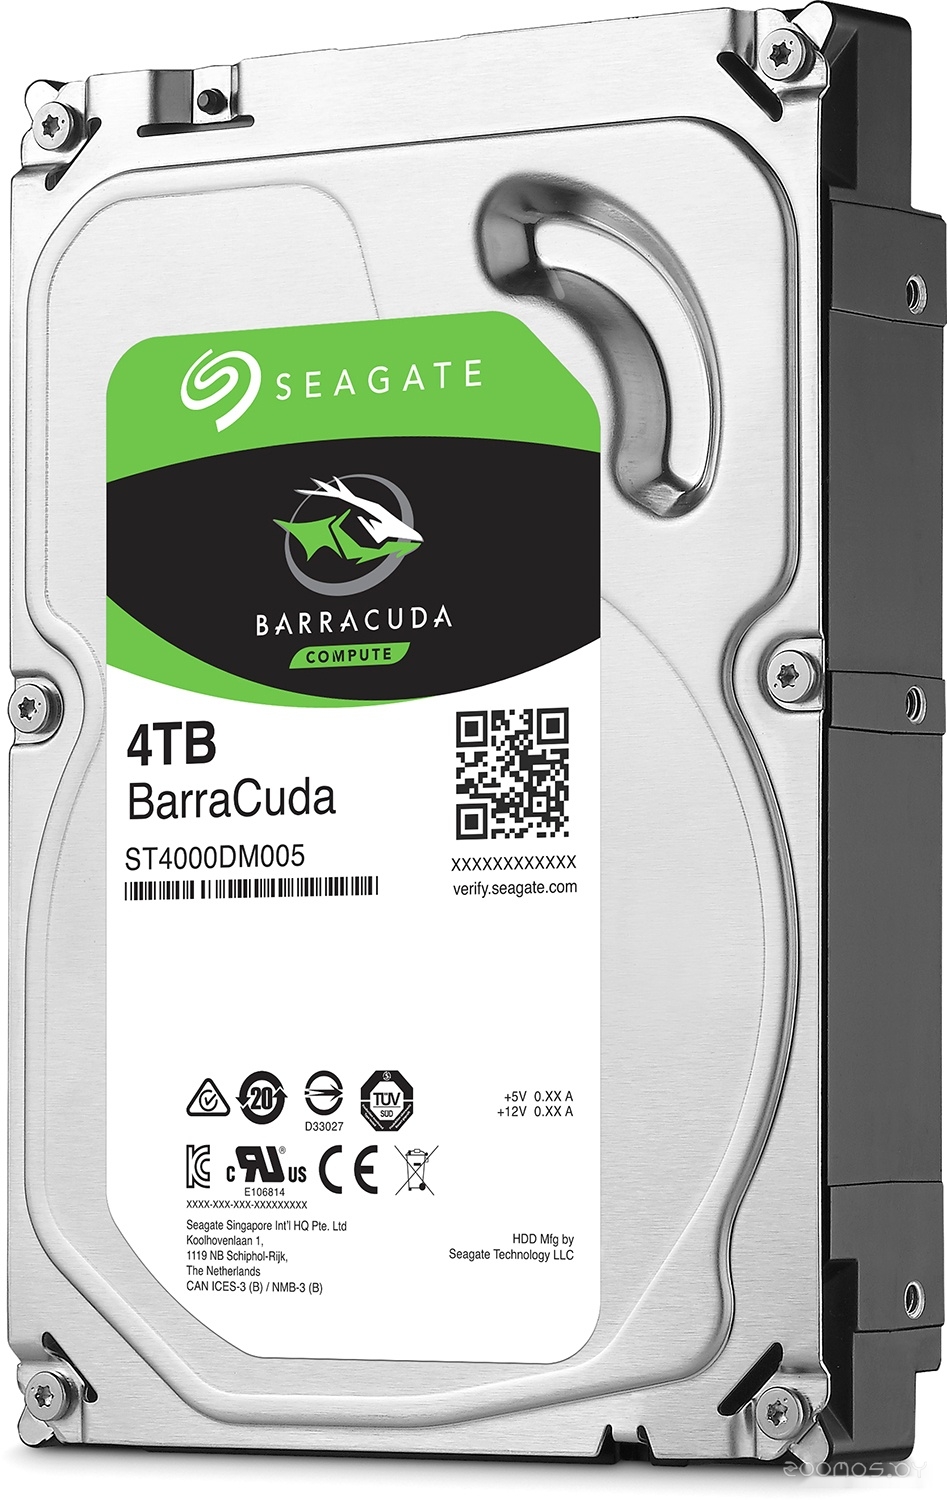   Seagate Barracuda 4TB [ST4000DM004]     